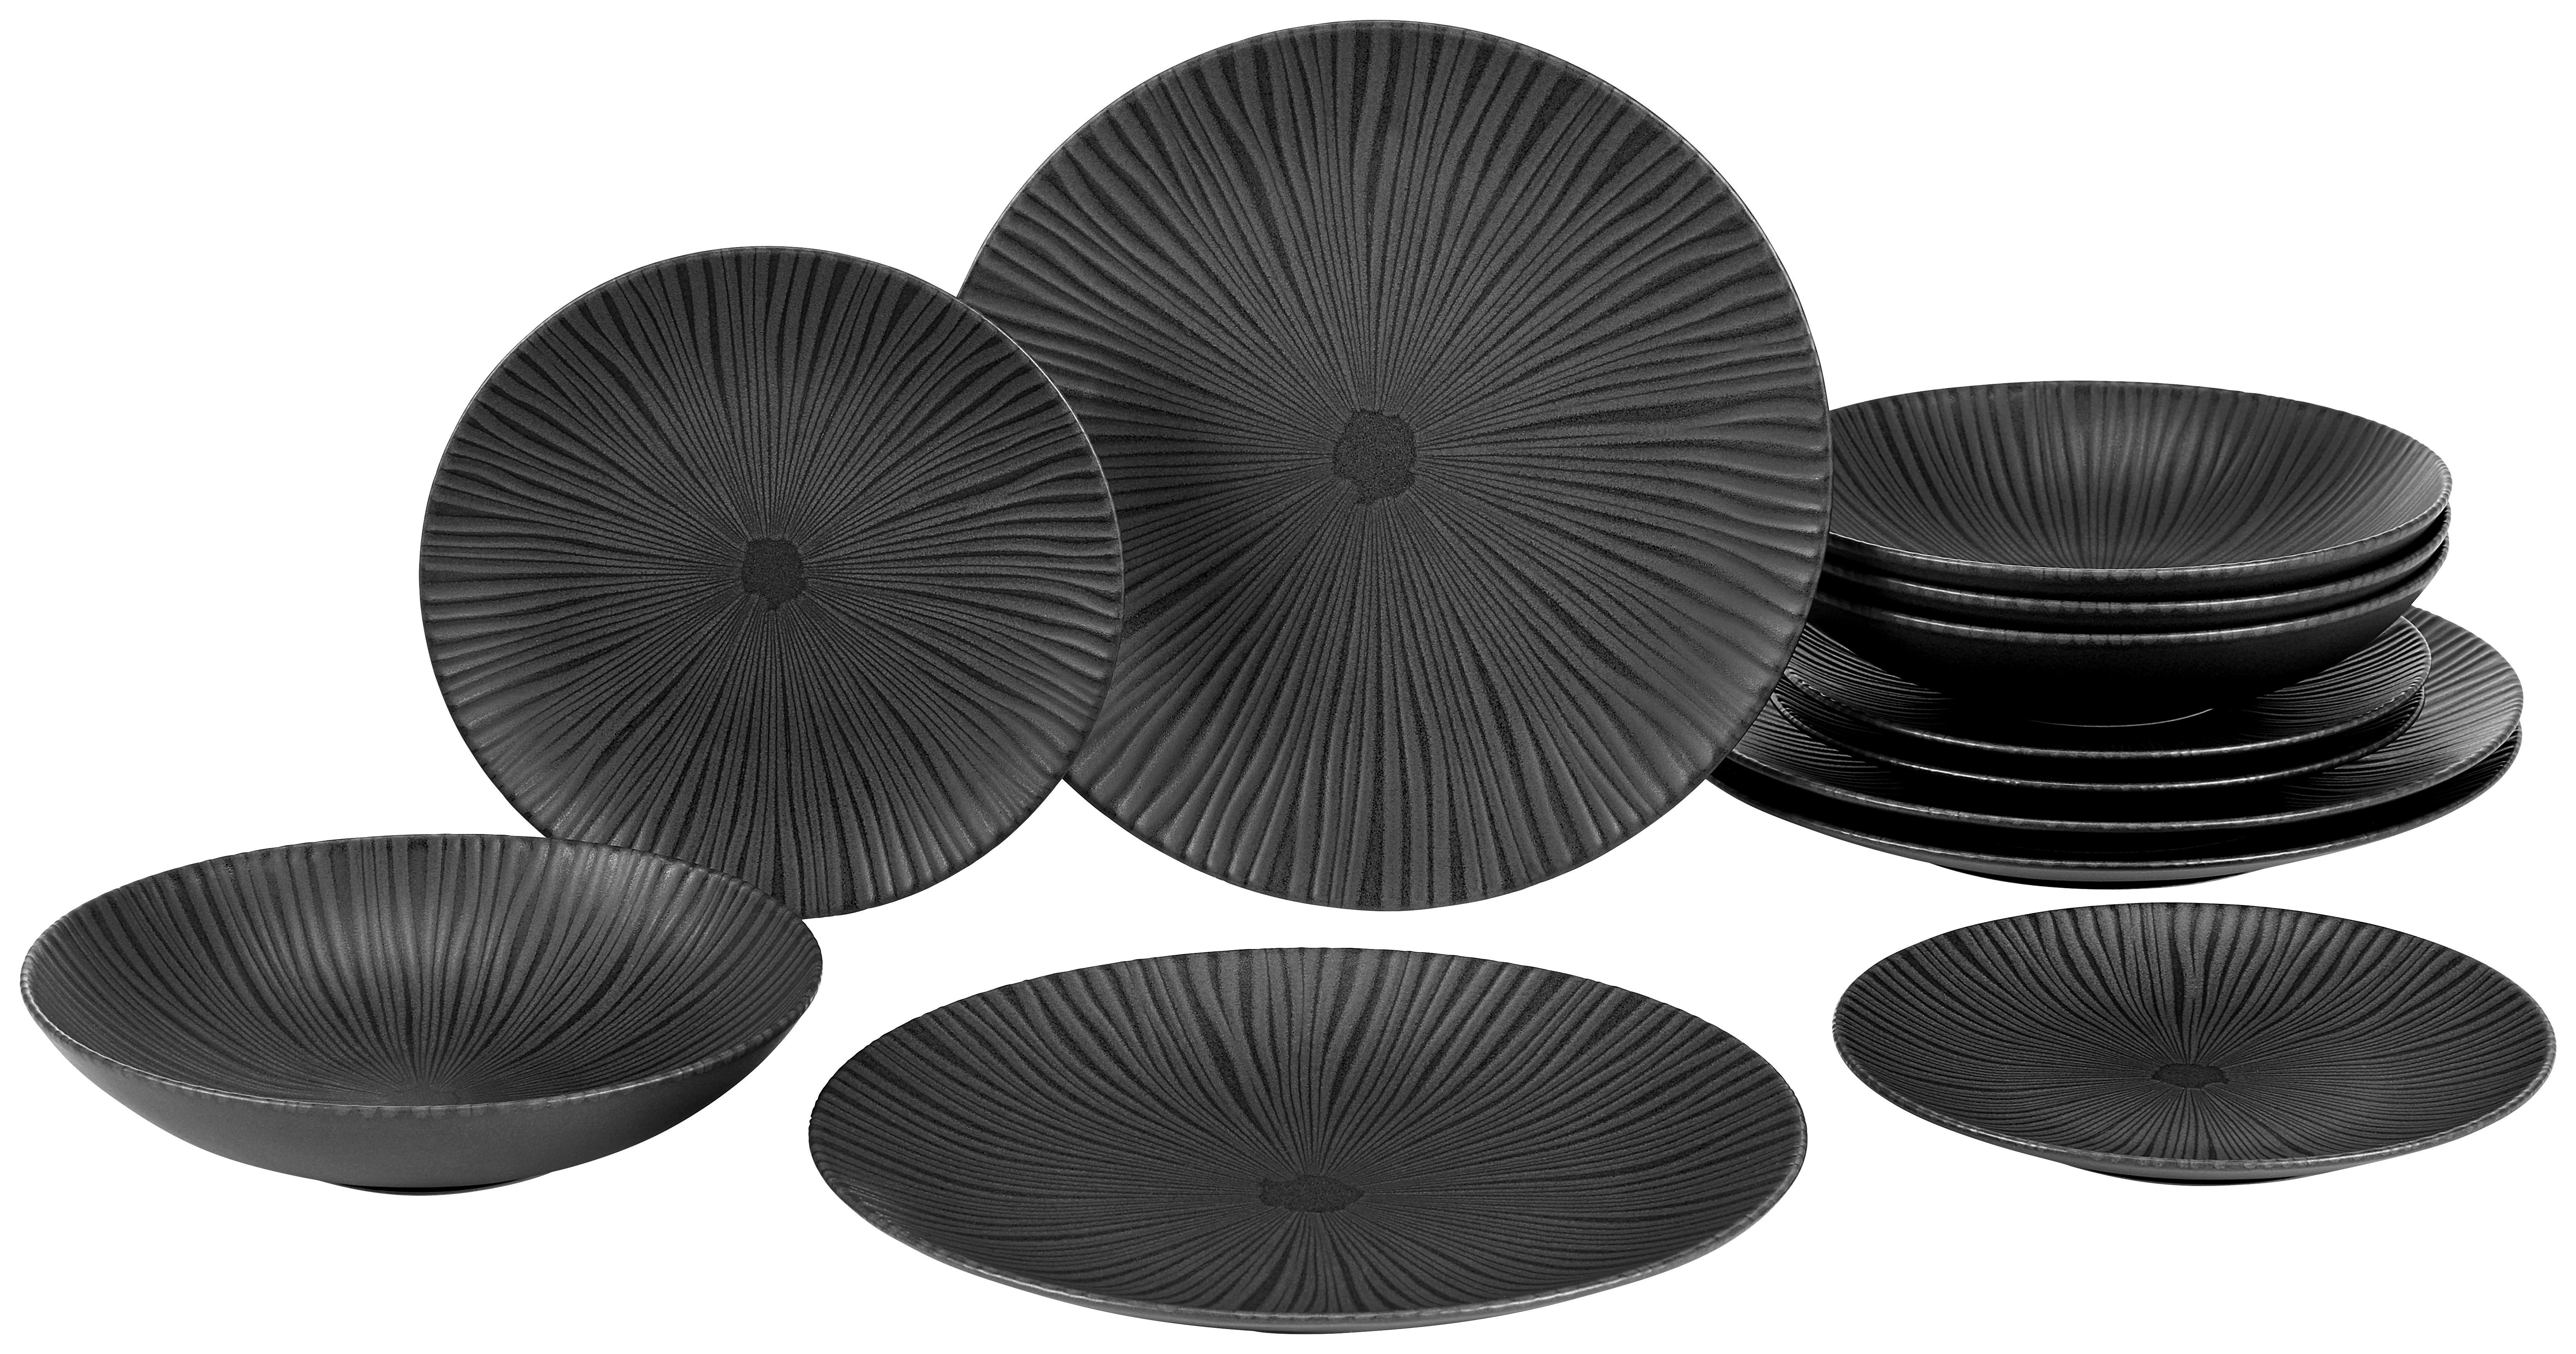 Tafelservice Black aus Steingut, 12-teilig - Schwarz, MODERN, Keramik (28,5/32,6/28,8cm) - Premium Living